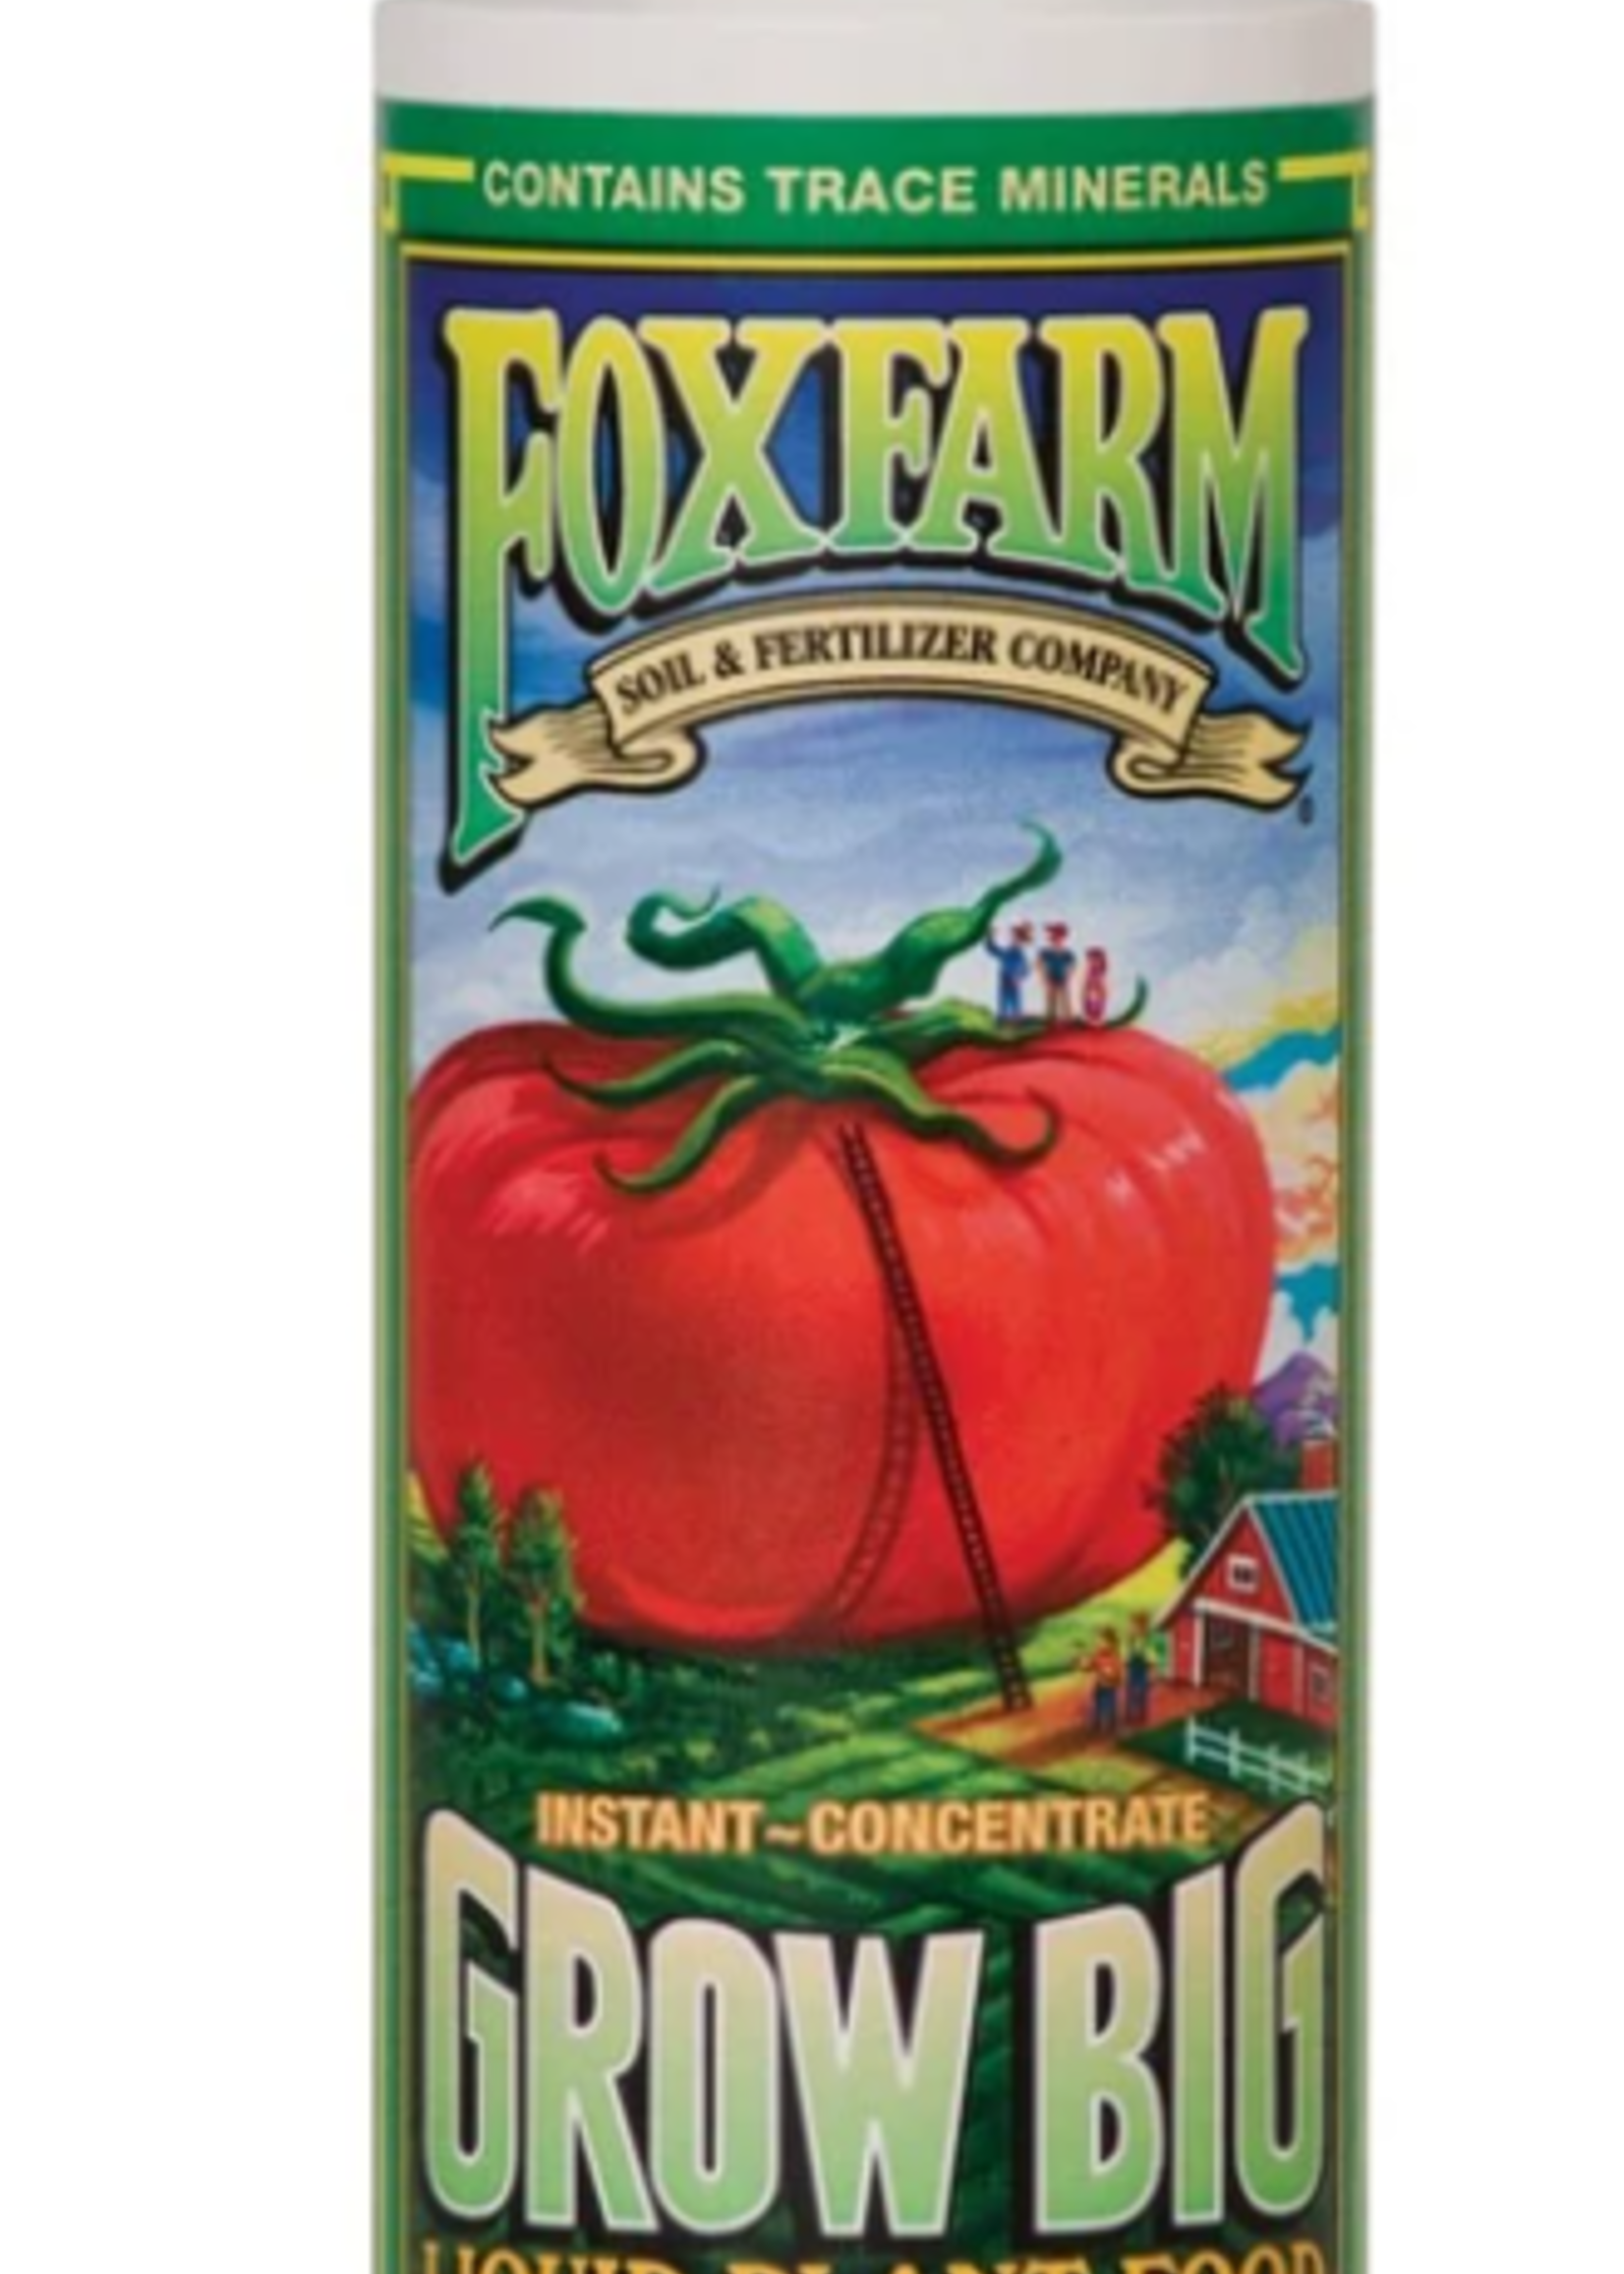 FoxFarm FoxFarm Grow Big® Liquid Concentrate, 1 qt